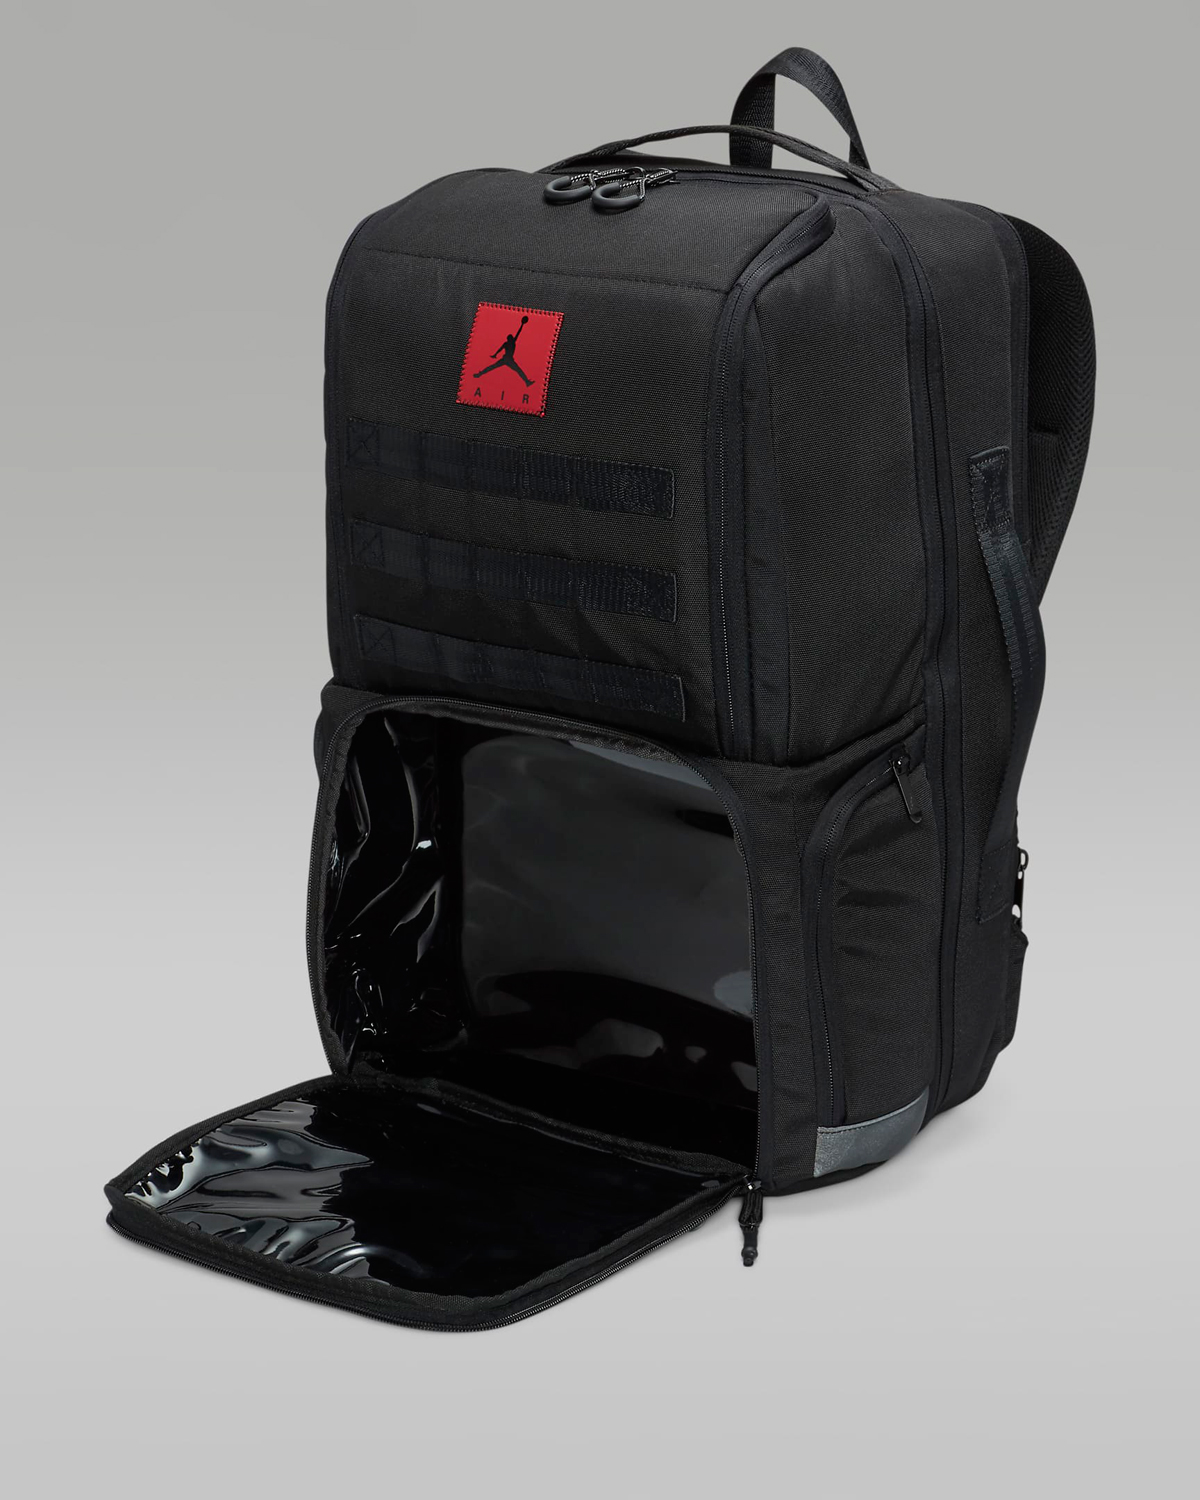 Jordan-Collectors-Backpack-Shoe-Organizer-Bag-Black-Red-2